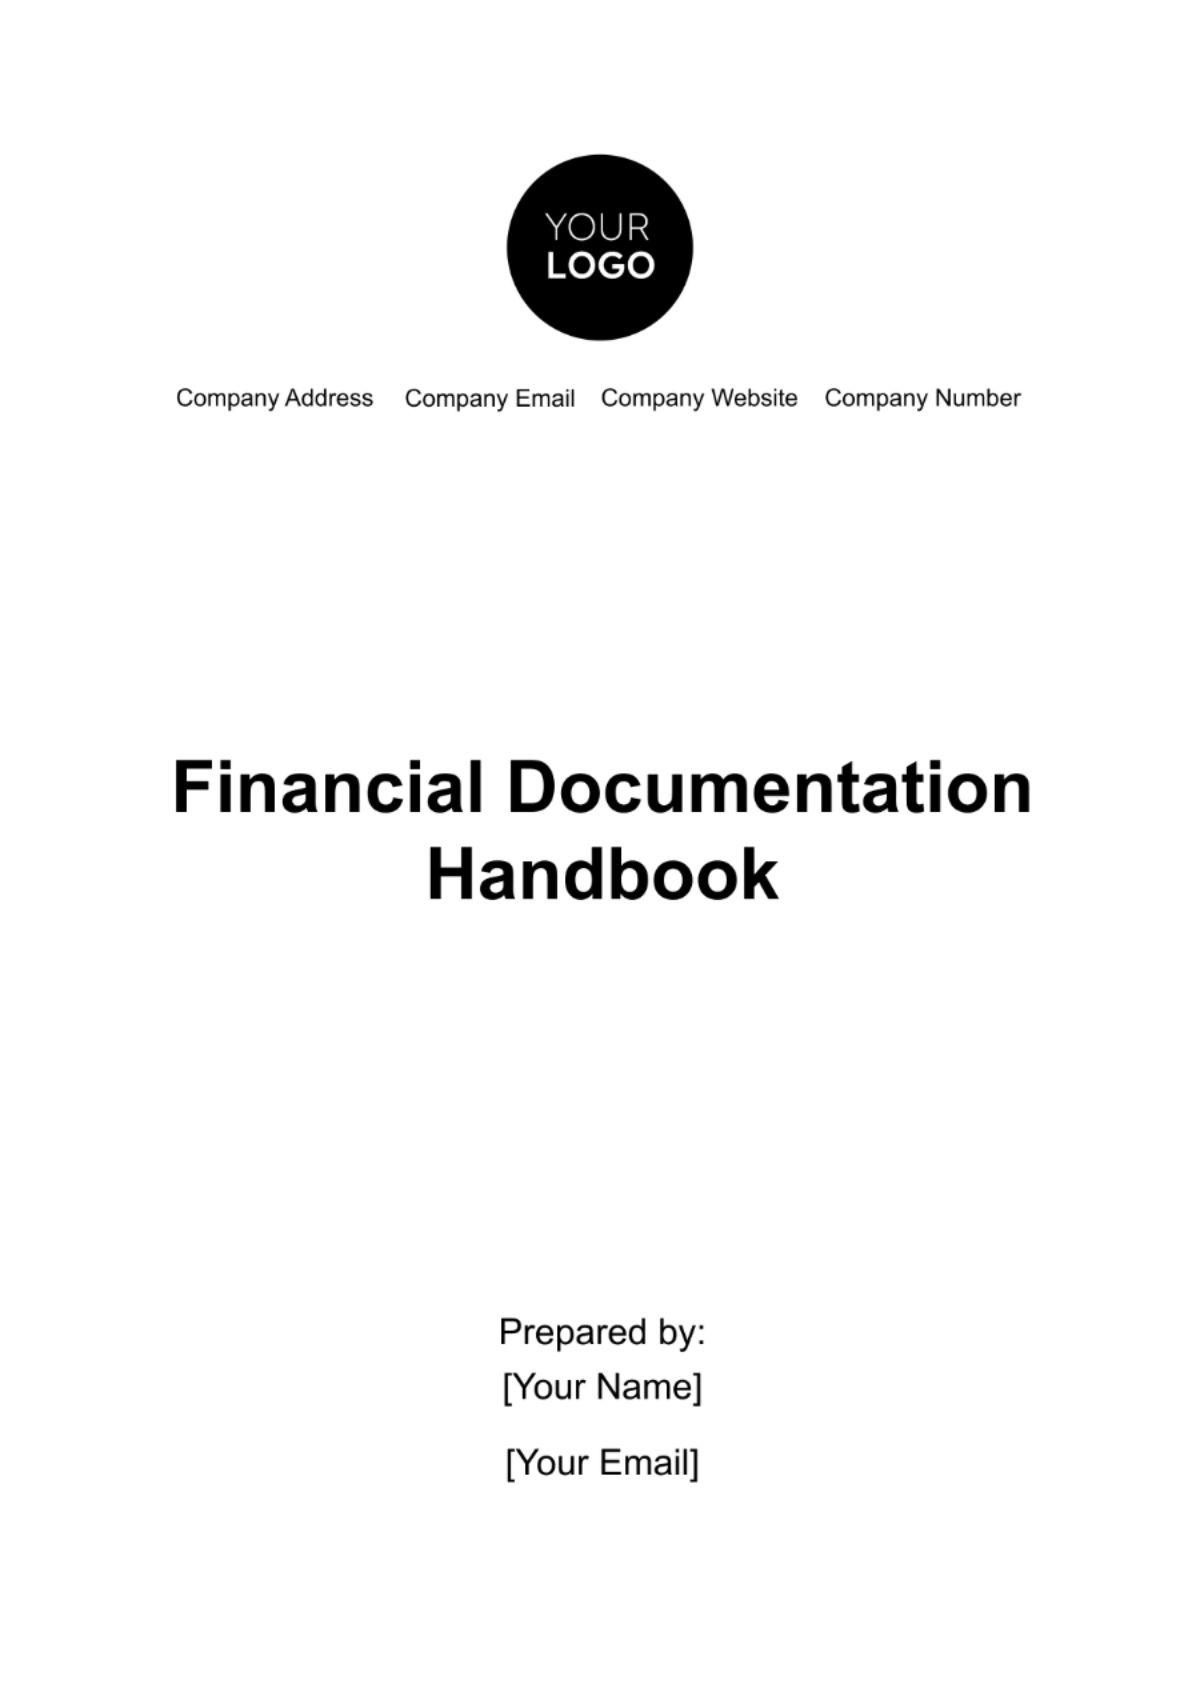 Financial Documentation Handbook Template